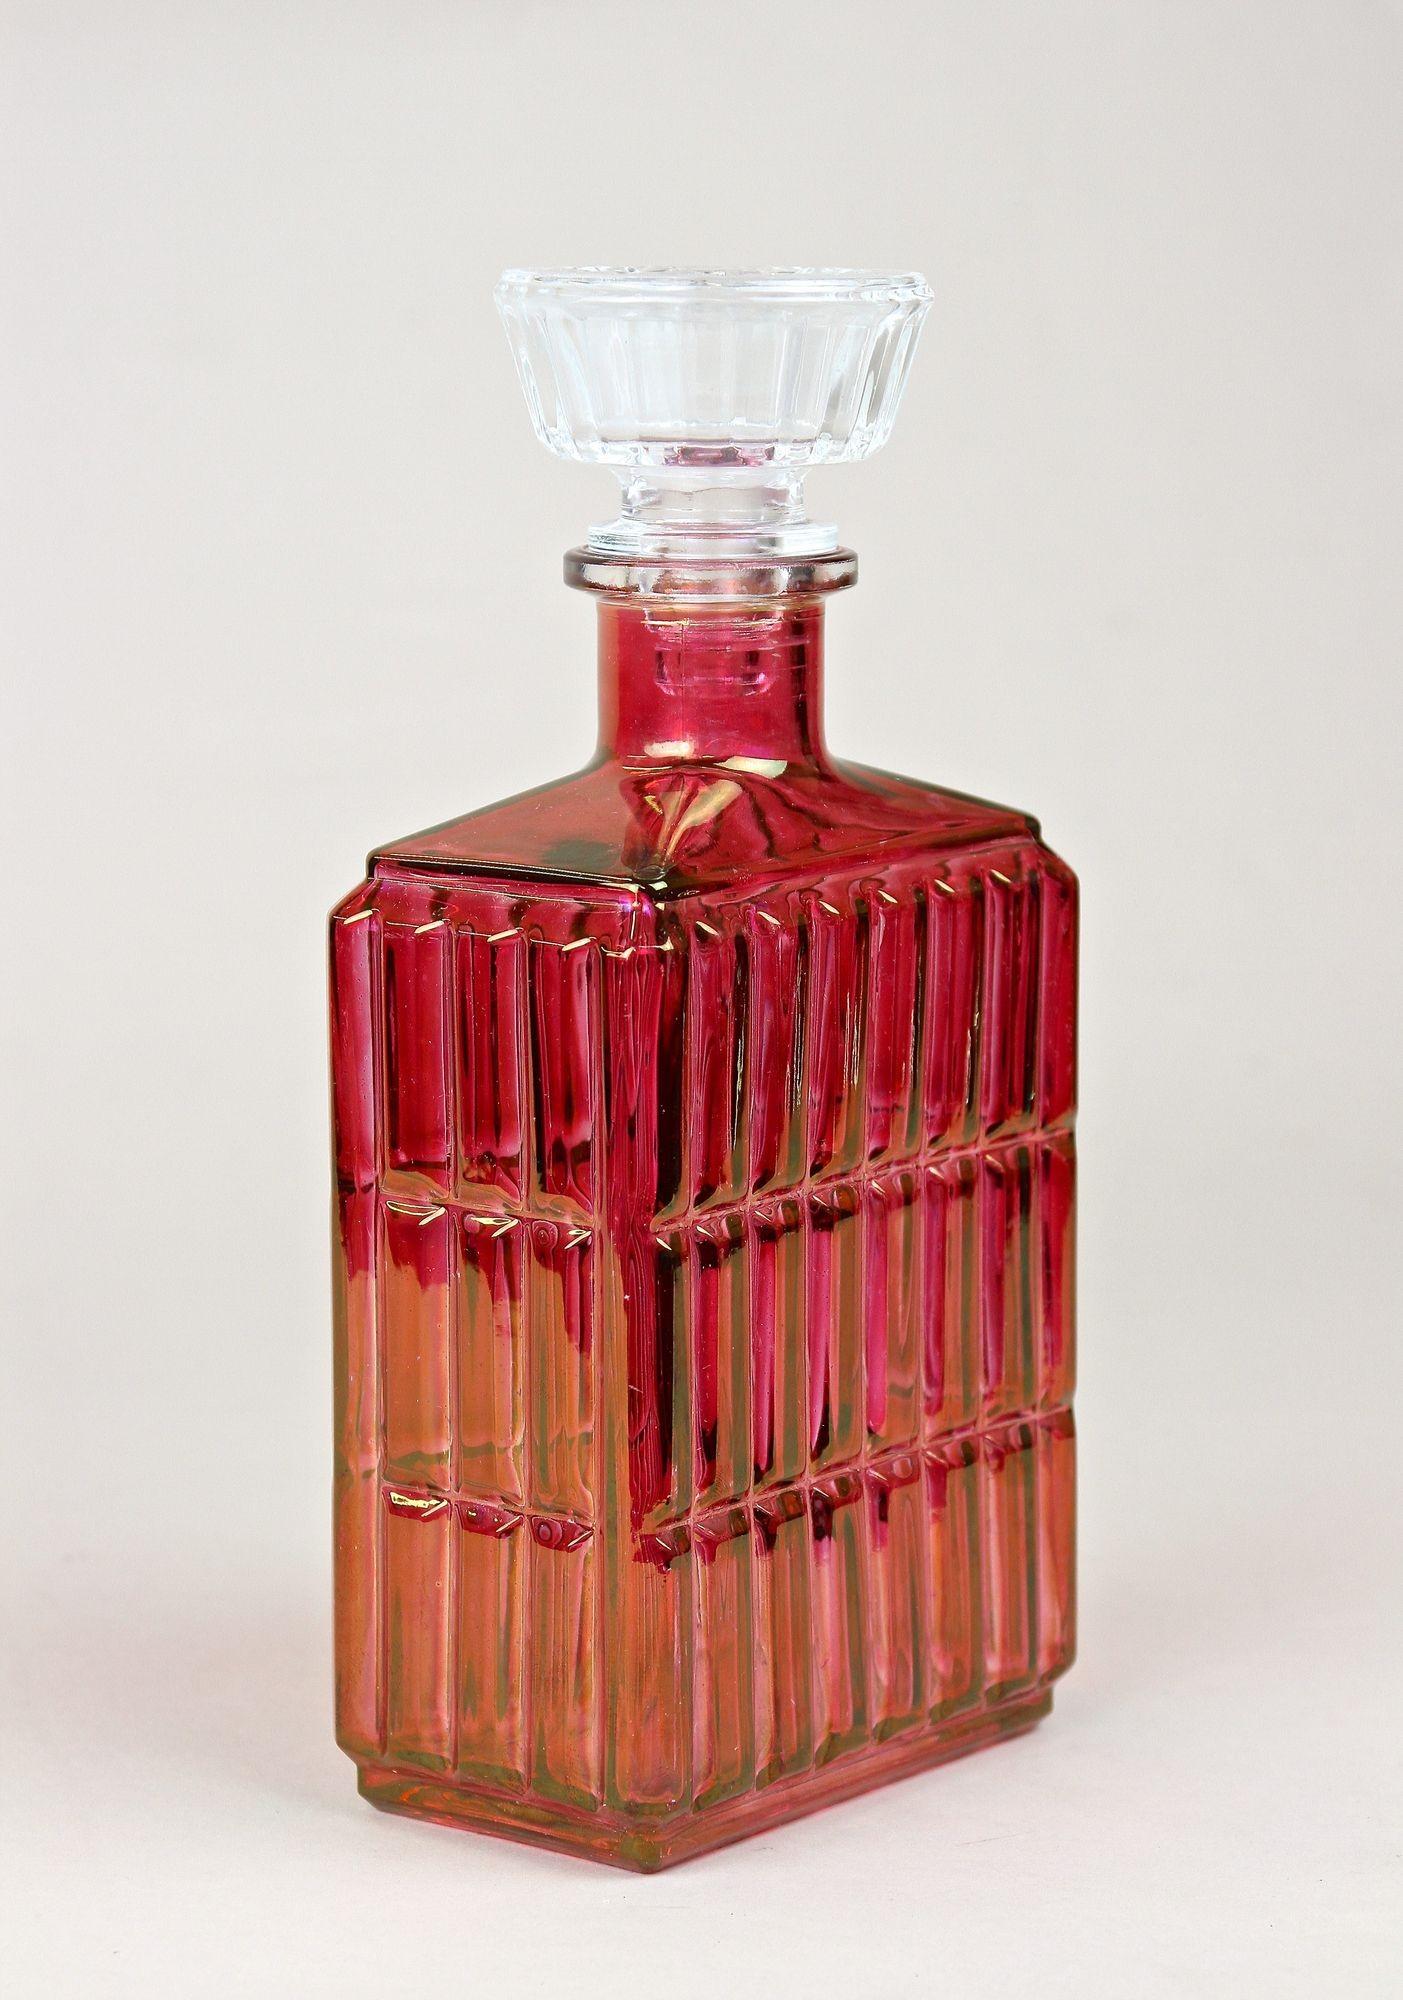 20th Century Art Deco Glass Decanter or Liquor Bottle, Austria ca. 1930 For Sale 9